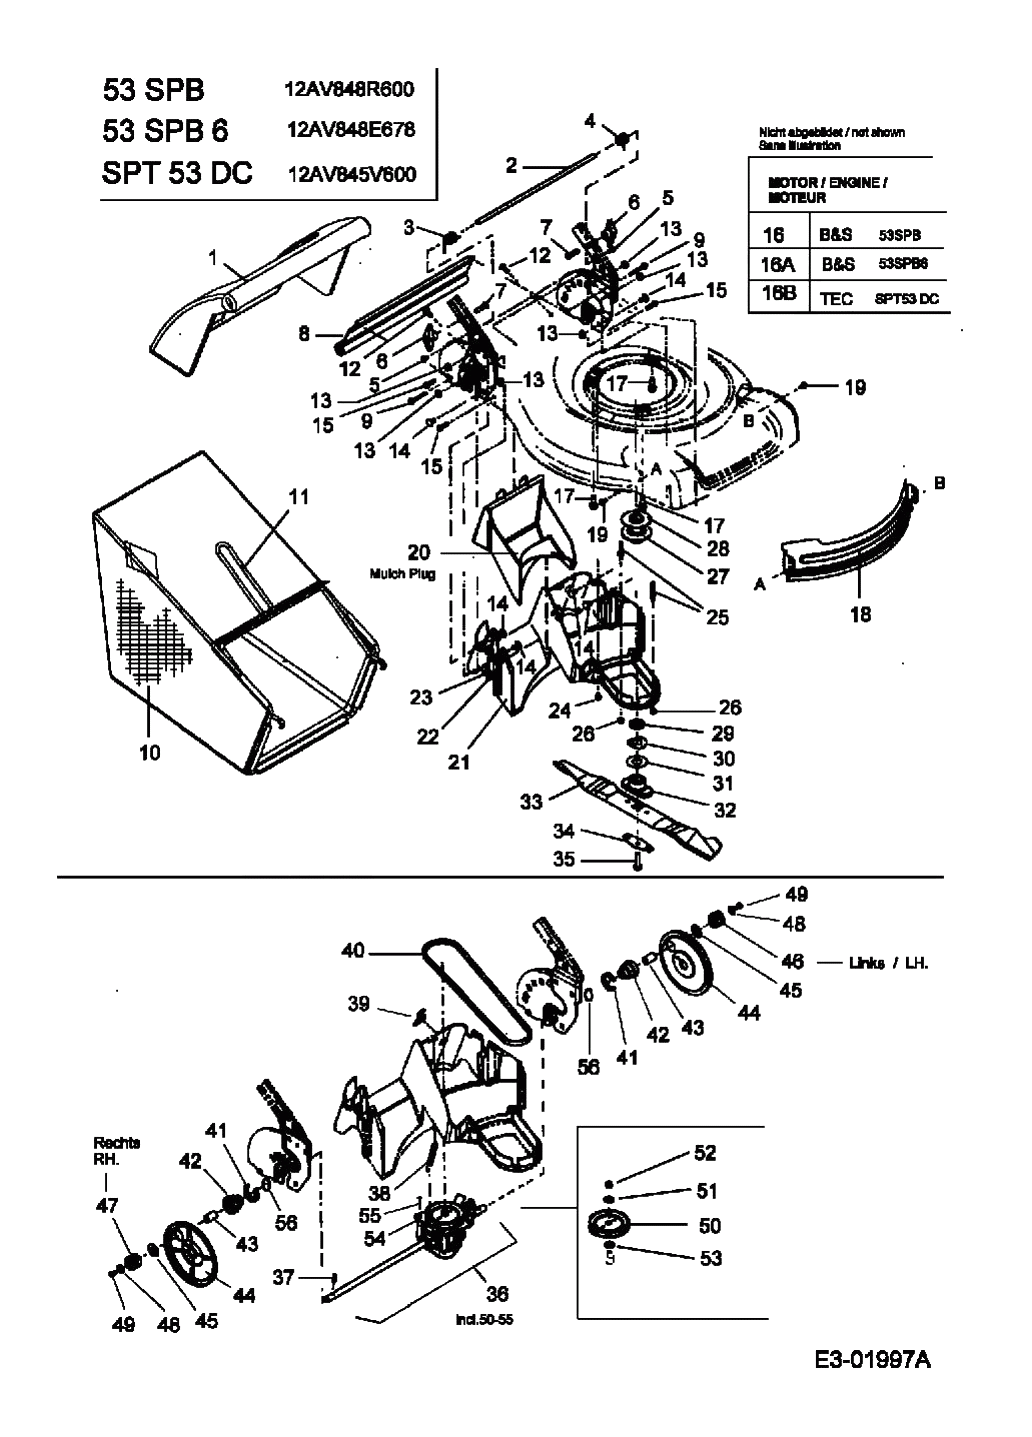 MTD Артикул 12AV848R600 (год выпуска 2005). Коробка передач, травосборник, нож, двигатель